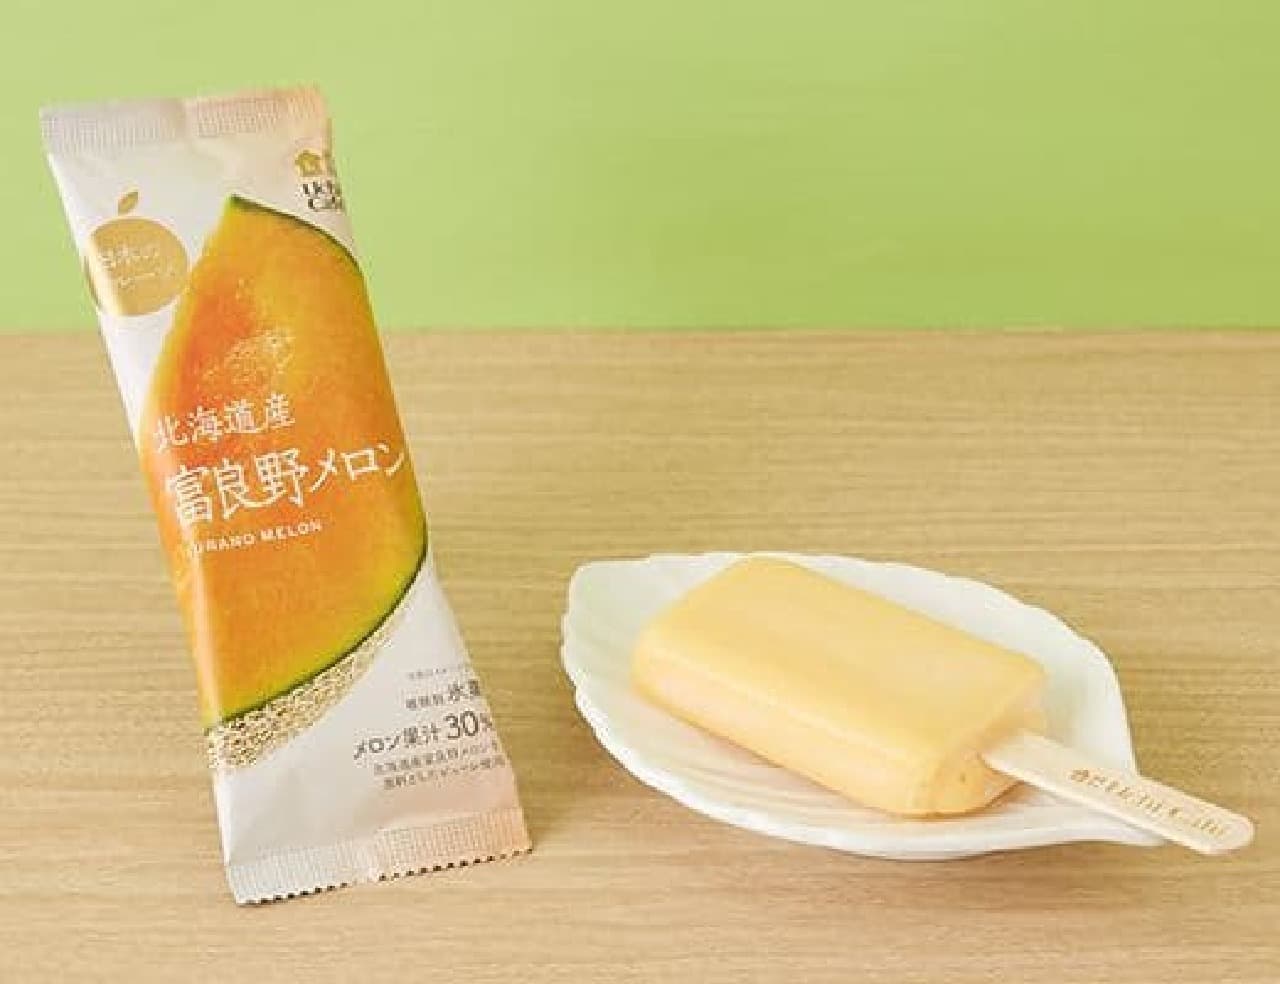 LAWSON "Uchicaffe Japanese Fruit Furano Melon 75ml